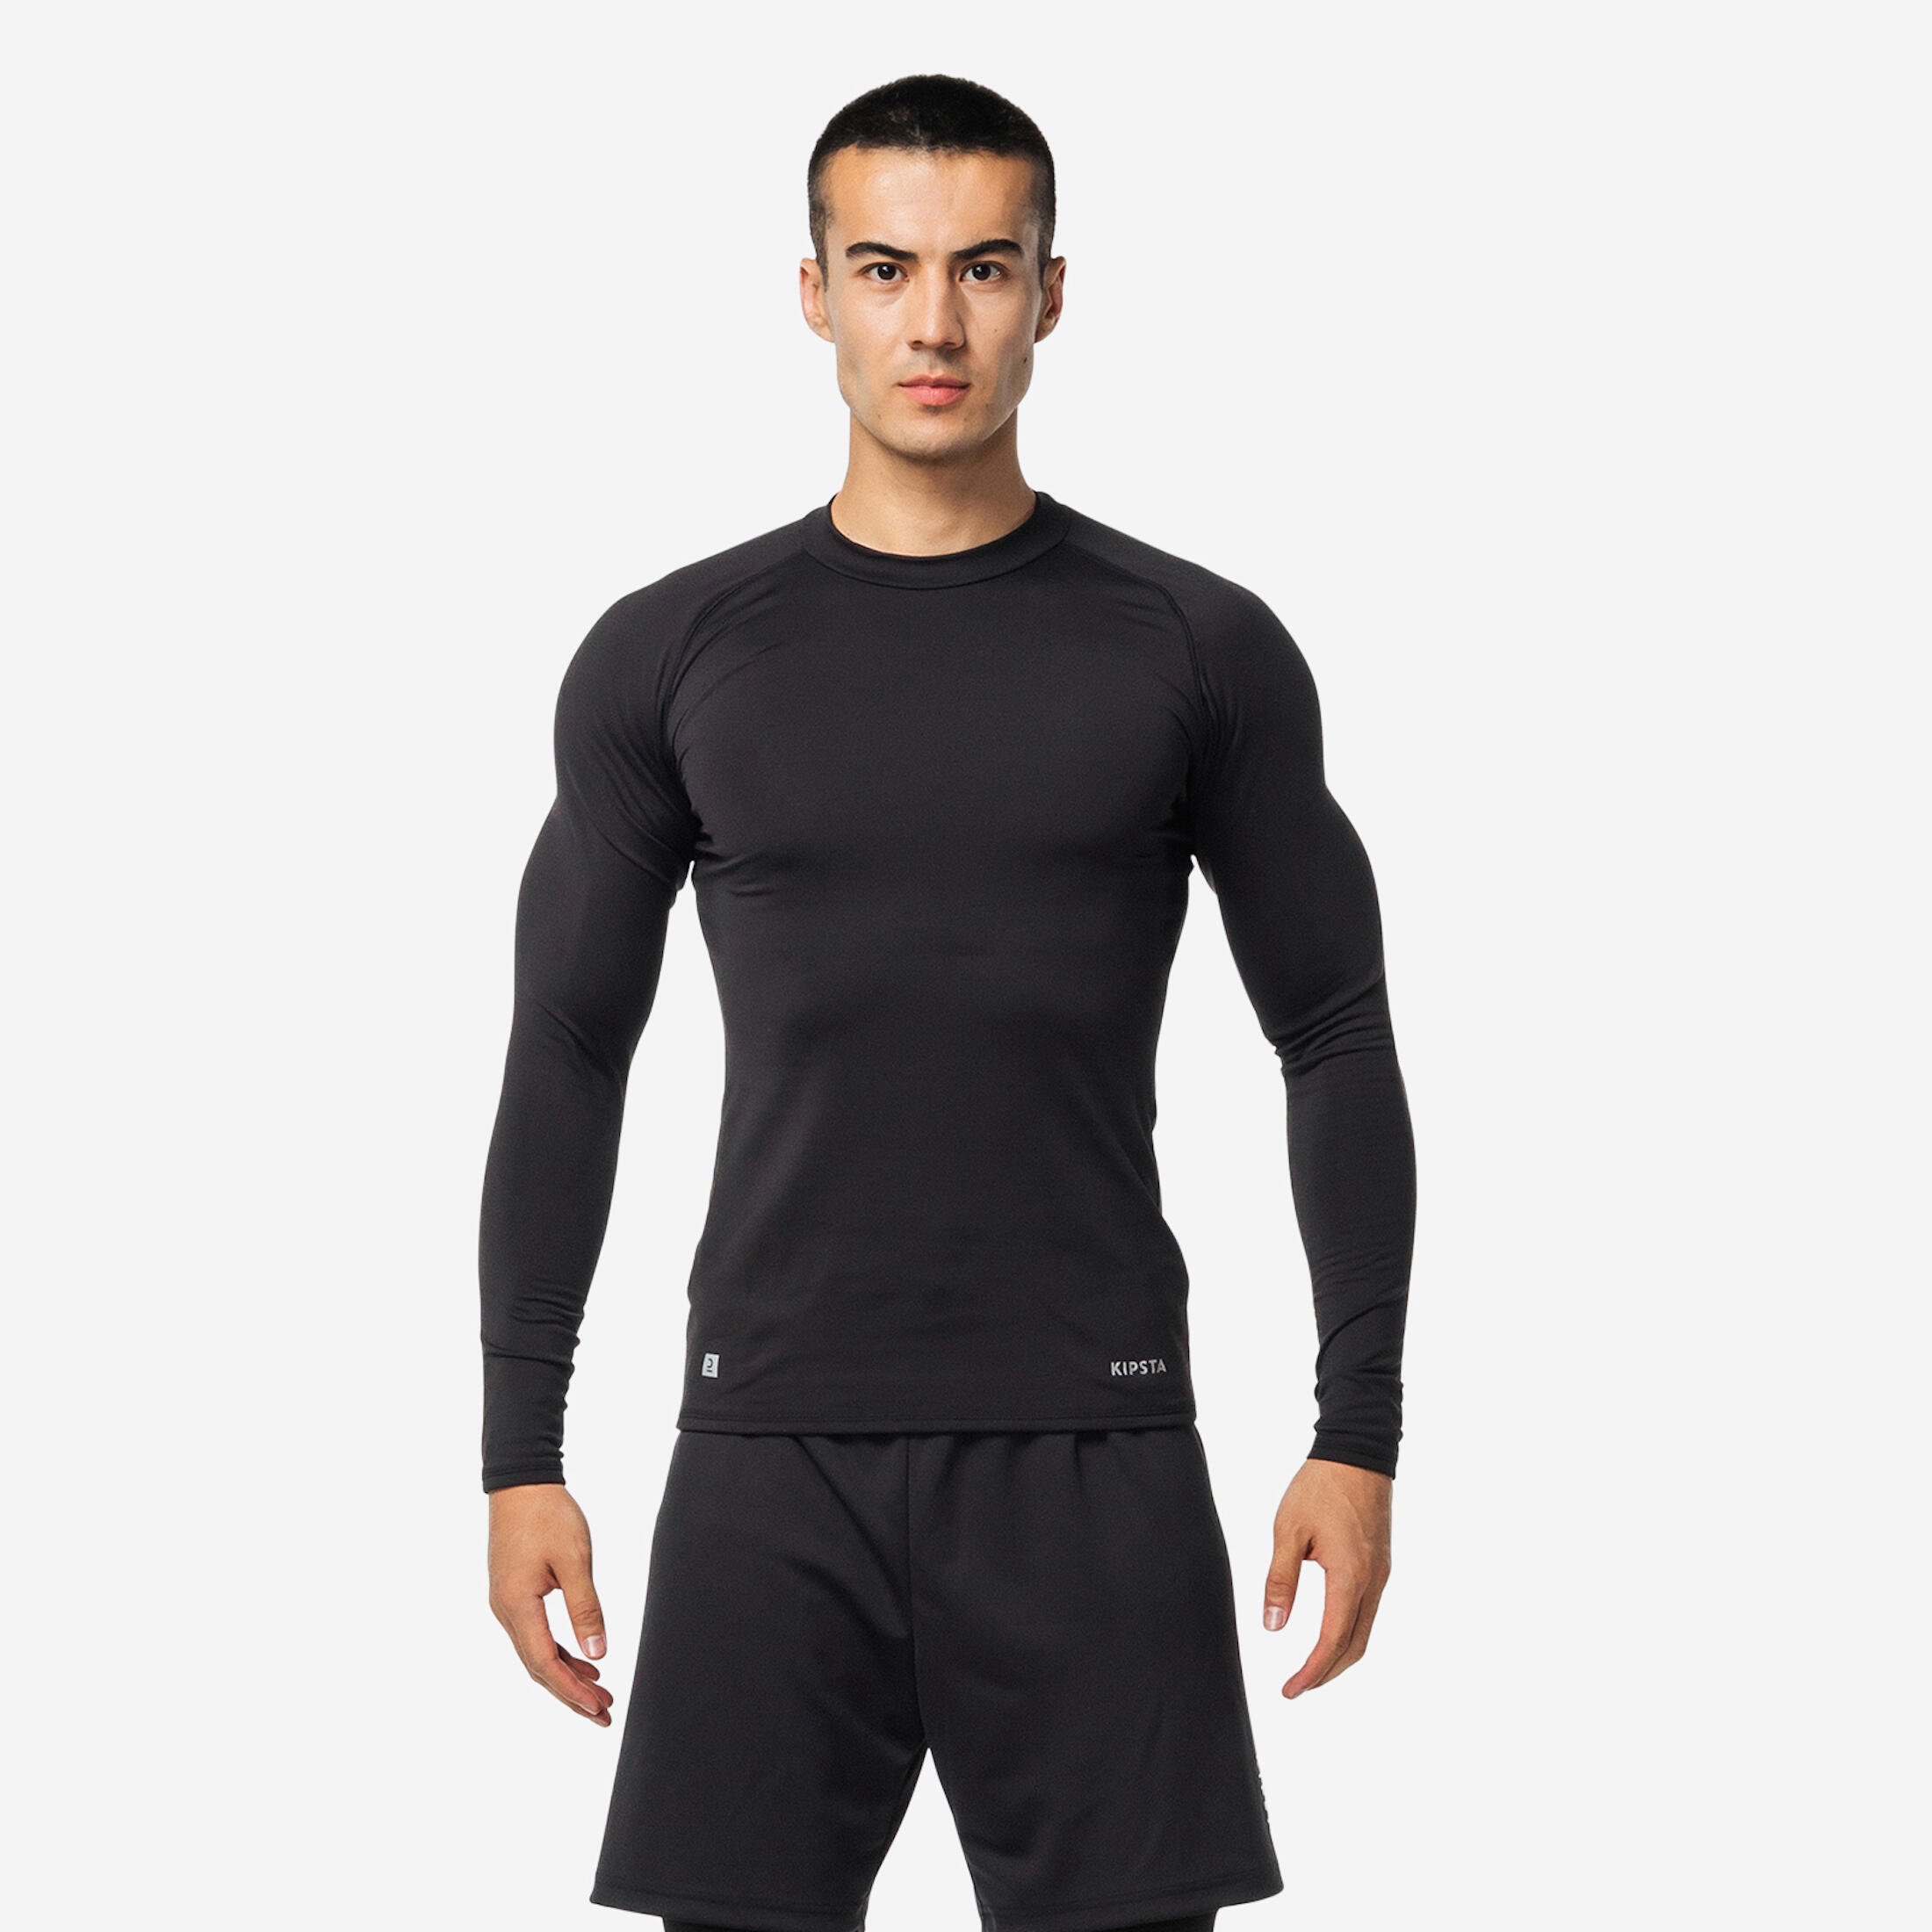 Men's Soccer Long-Sleeved Thermal Base Layer Top Keepcomfort 100